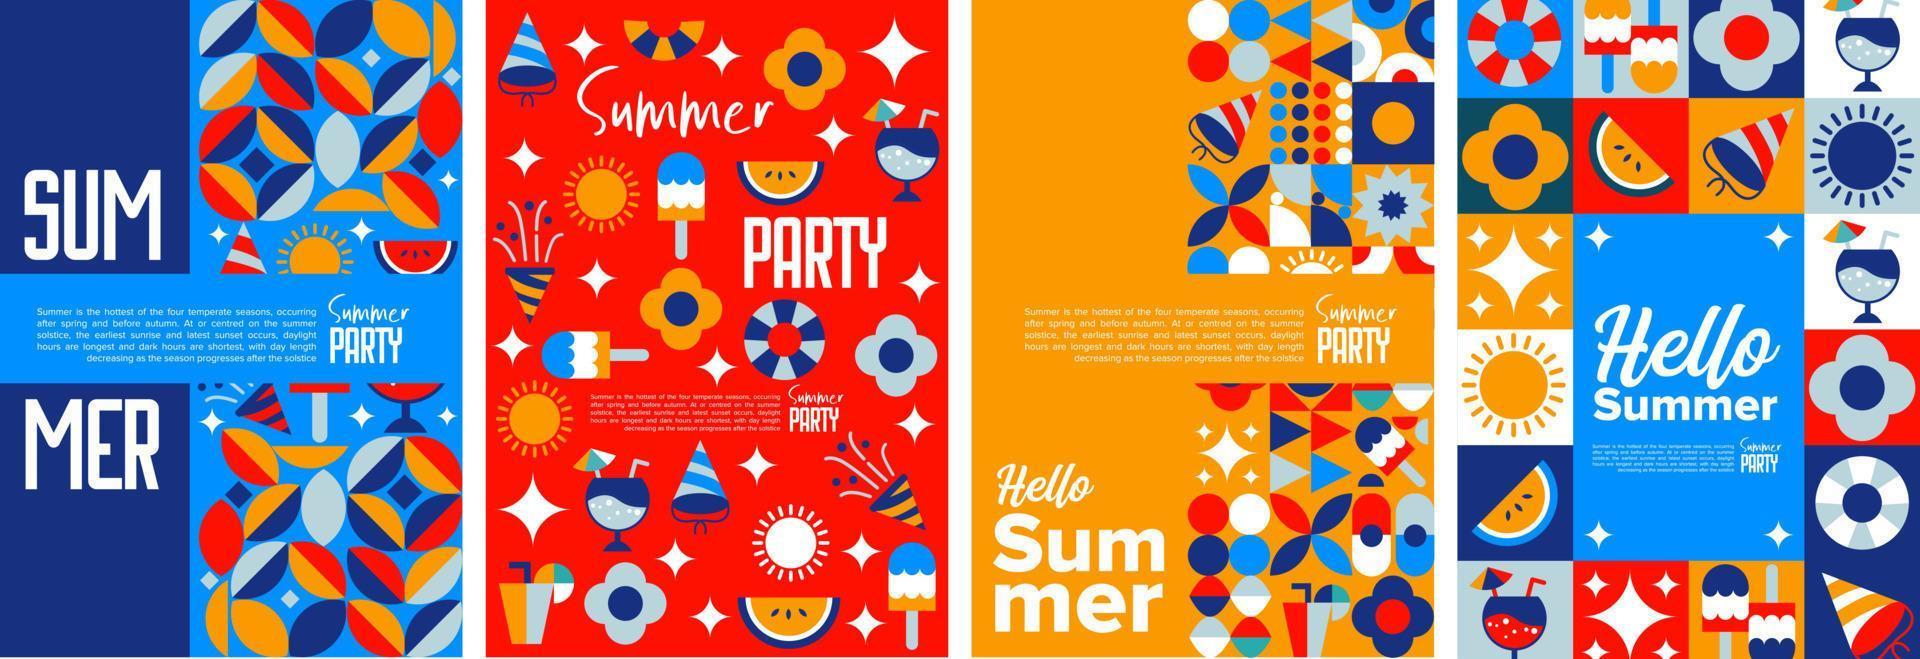 urlaub sommer poster vorlage. abstrakt flyer hintergrund sommer. kreative Buchumschlag-Vektorillustration vektor